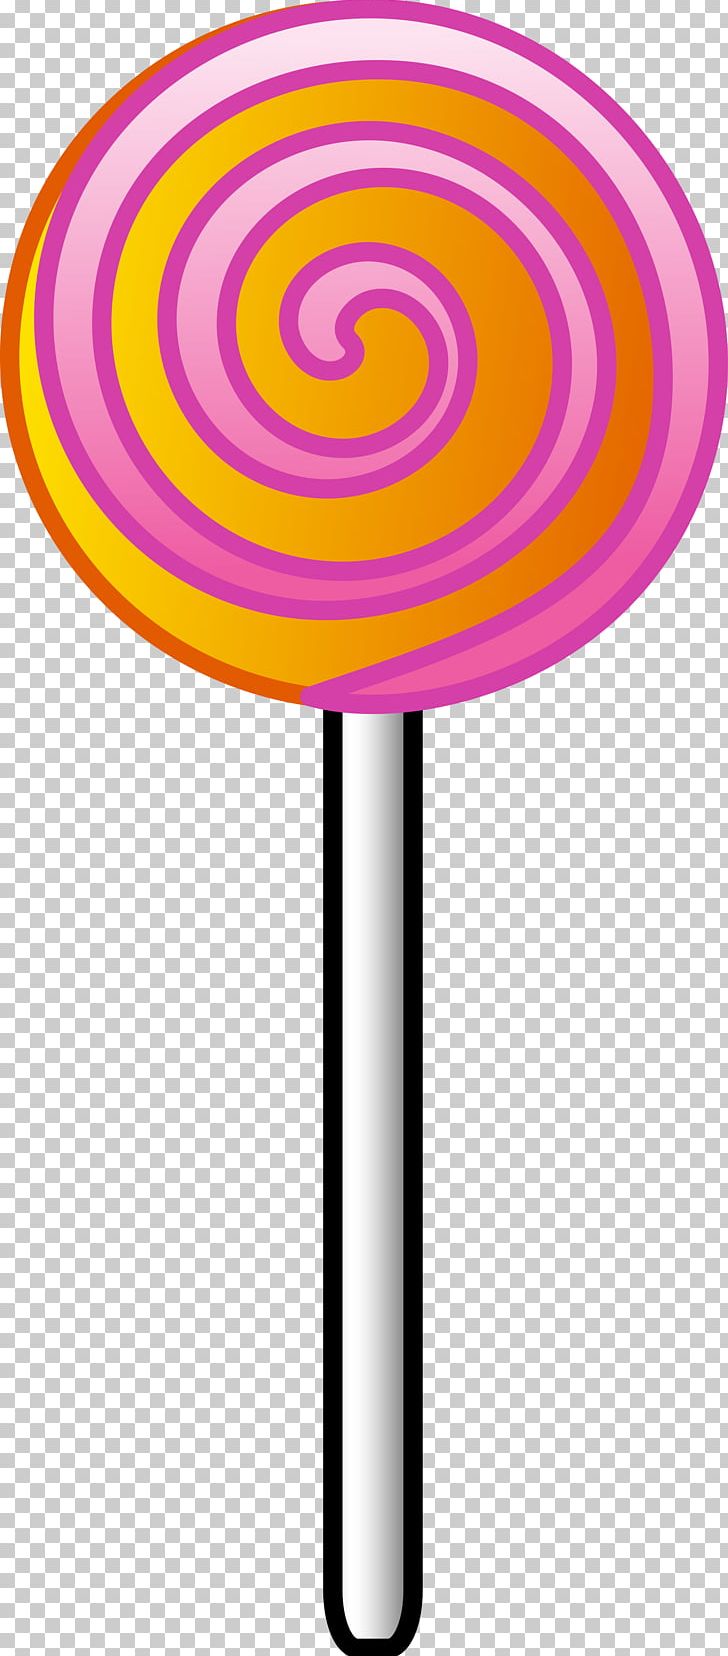 Doughnut Lollipop Candy PNG, Clipart, Candy, Chocolate, Circle, Dessert, Doughnut Free PNG Download